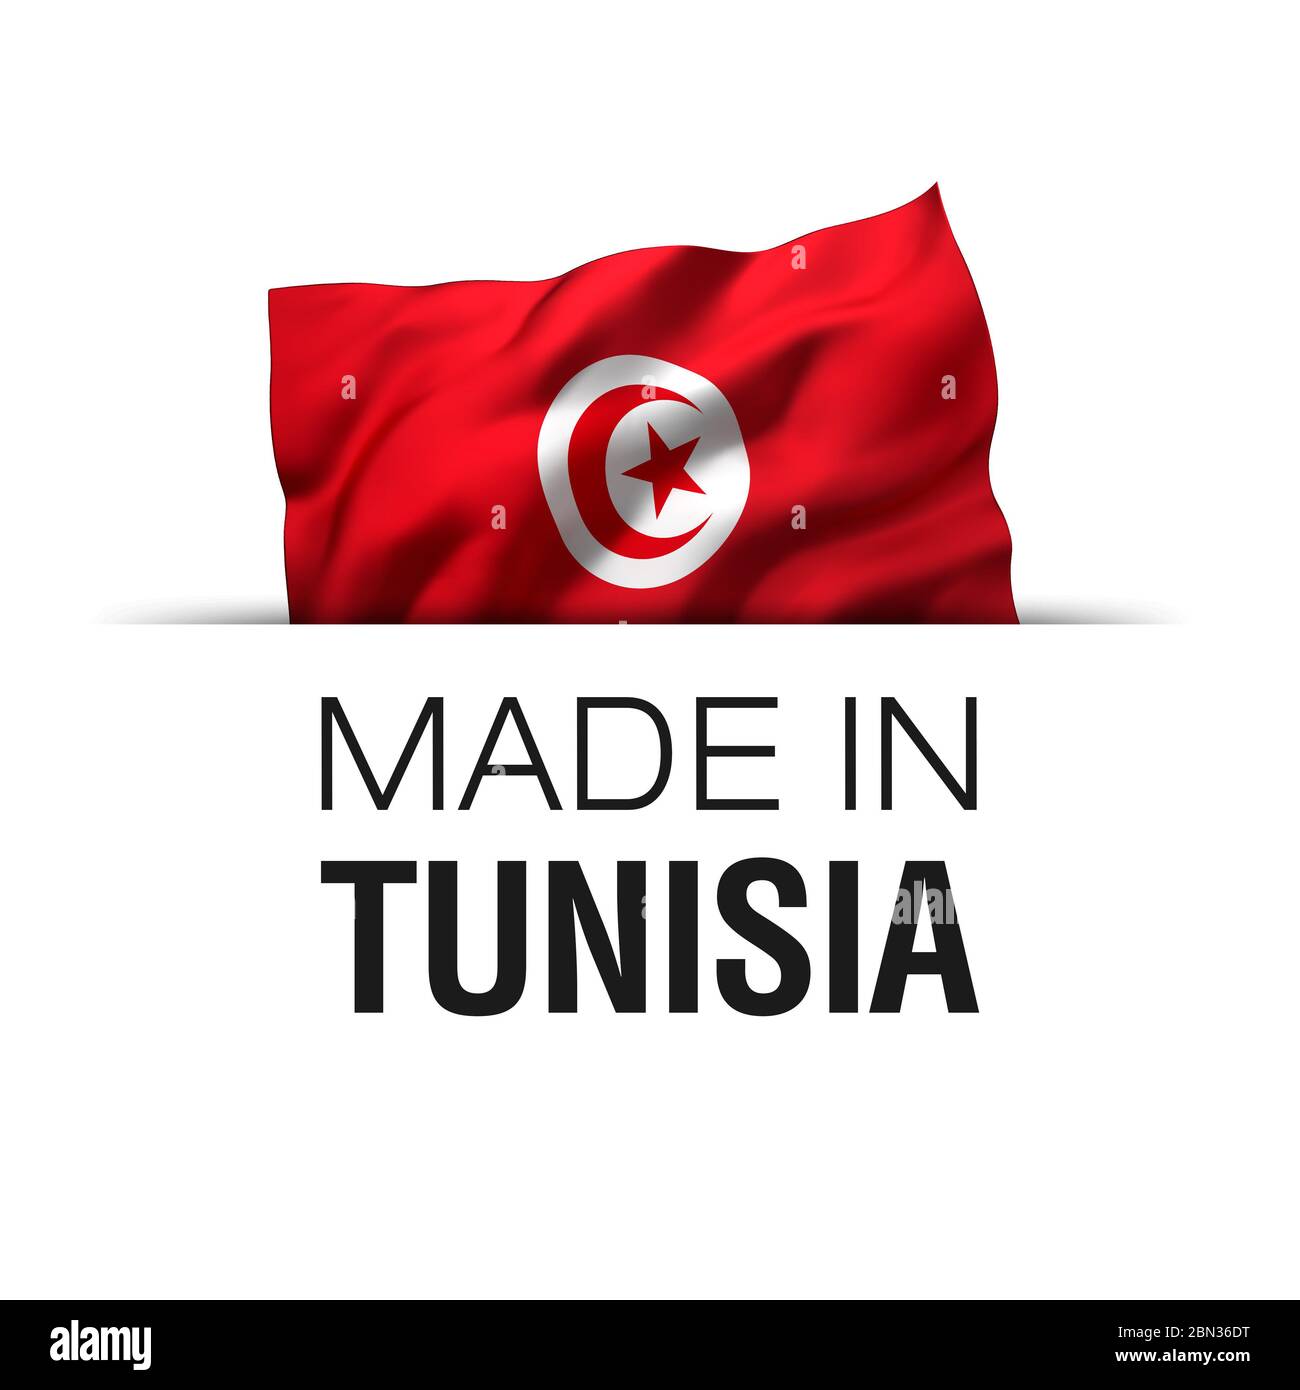 Made in Tunisia - Guarantee label with a waving Tunisian flag. 3D illustration. Stock Photo